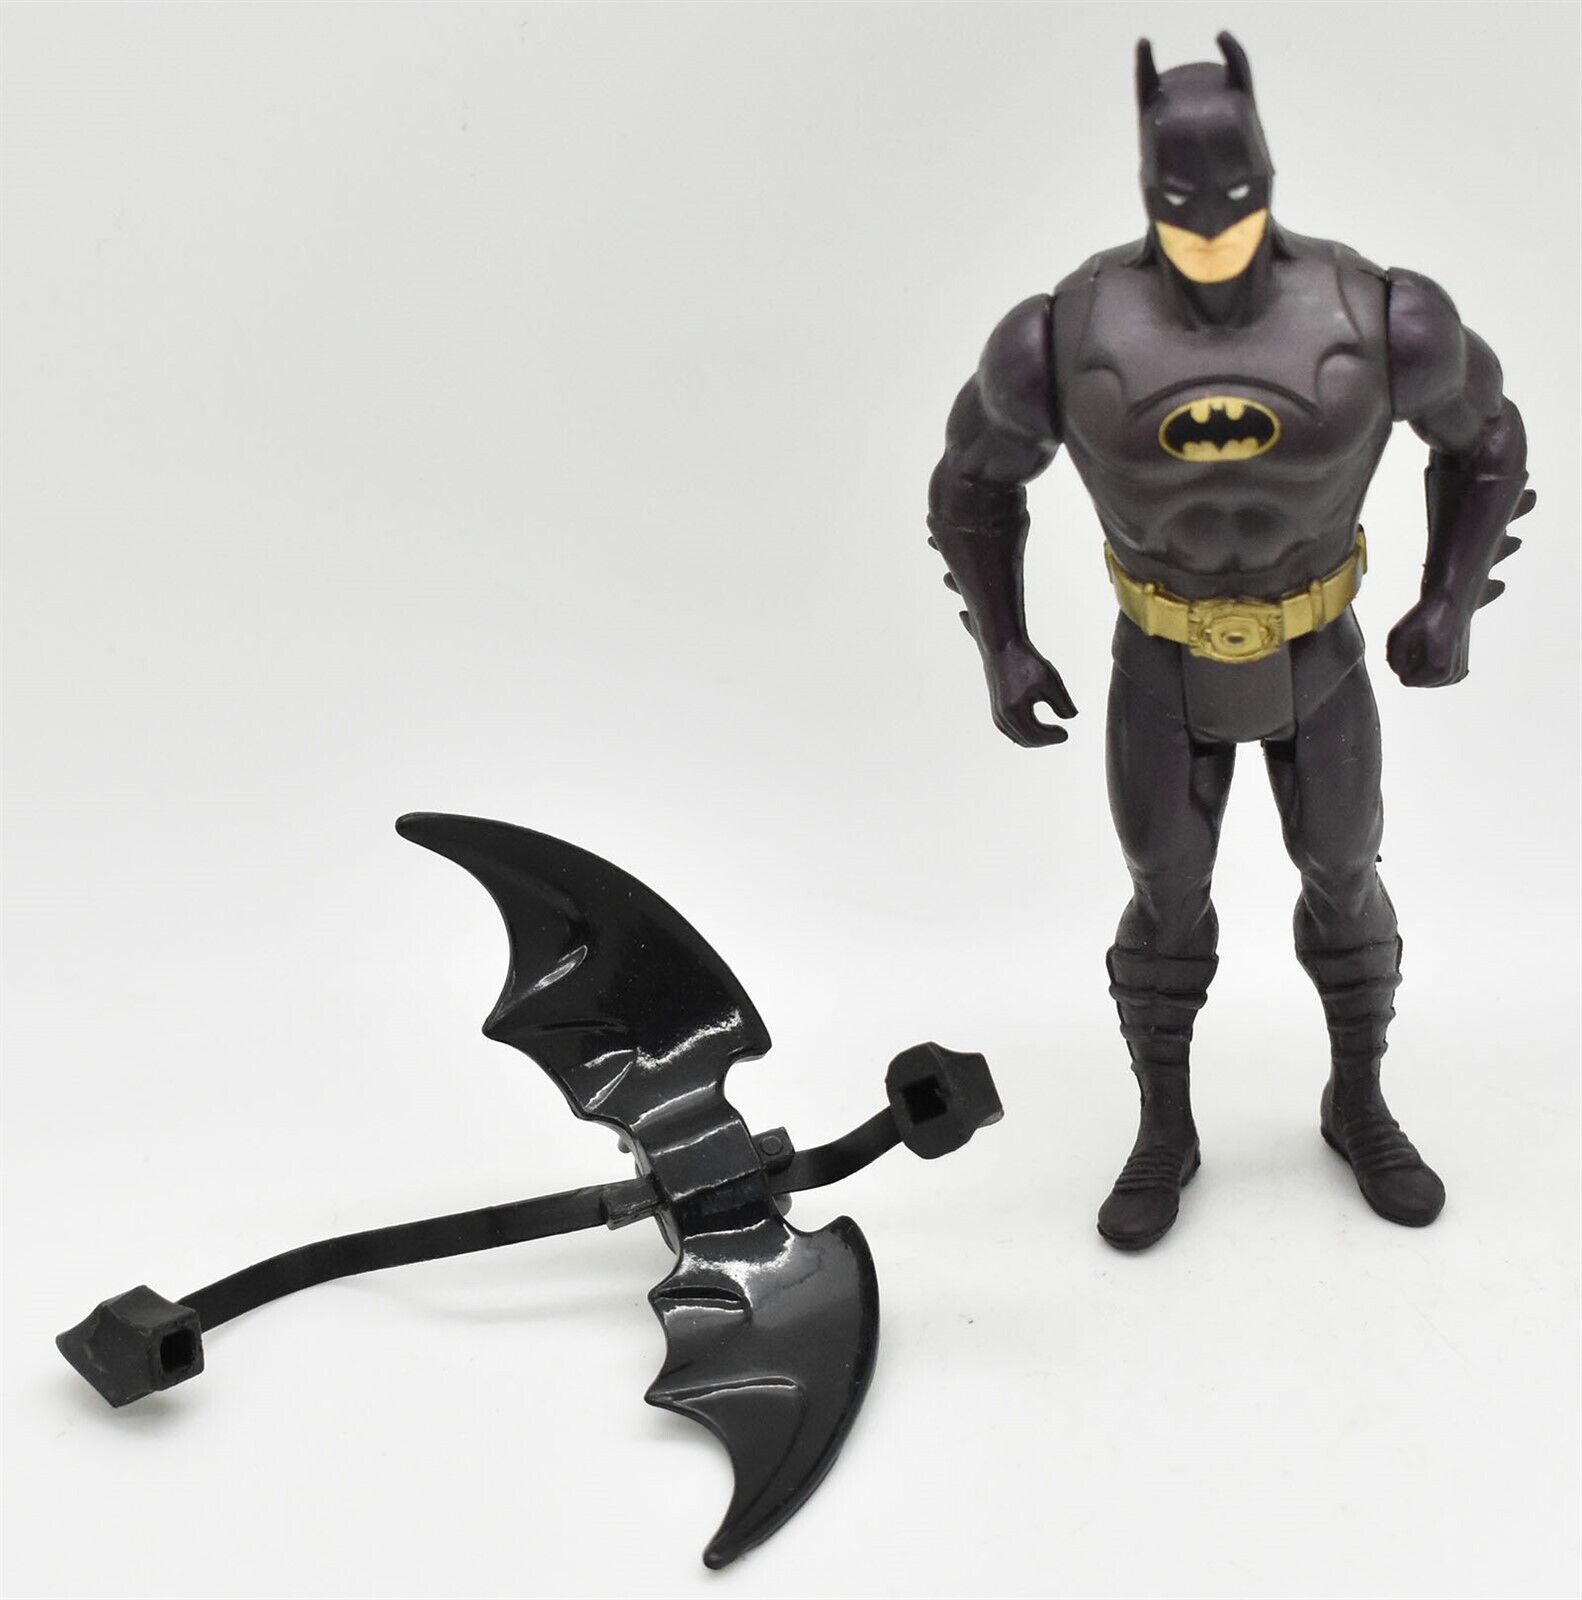 Batman Movie Collection Batman From Vs Joker 2 Pack Action Figure Kenner 1997